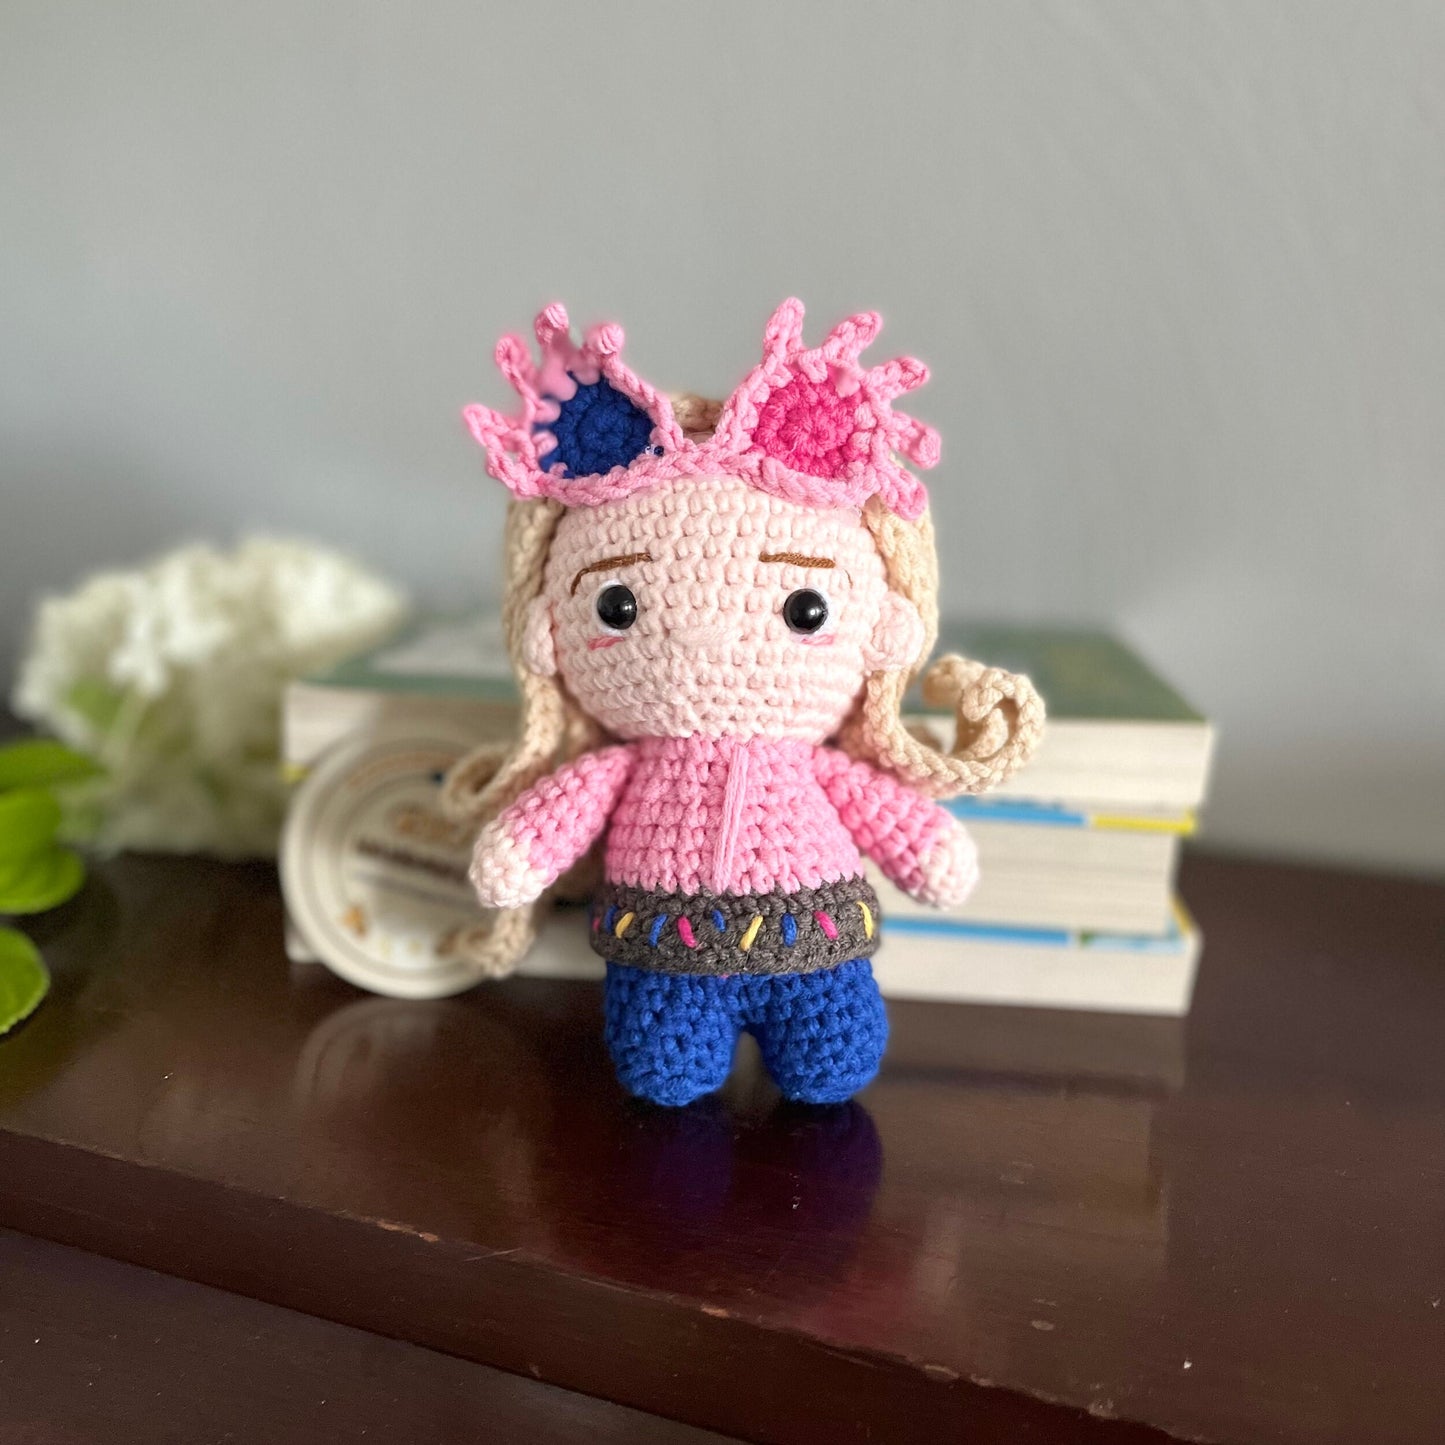 Rio Handmade crocheted doll, Crochet doll, Handmade plush doll,  custom doll, Cute gift